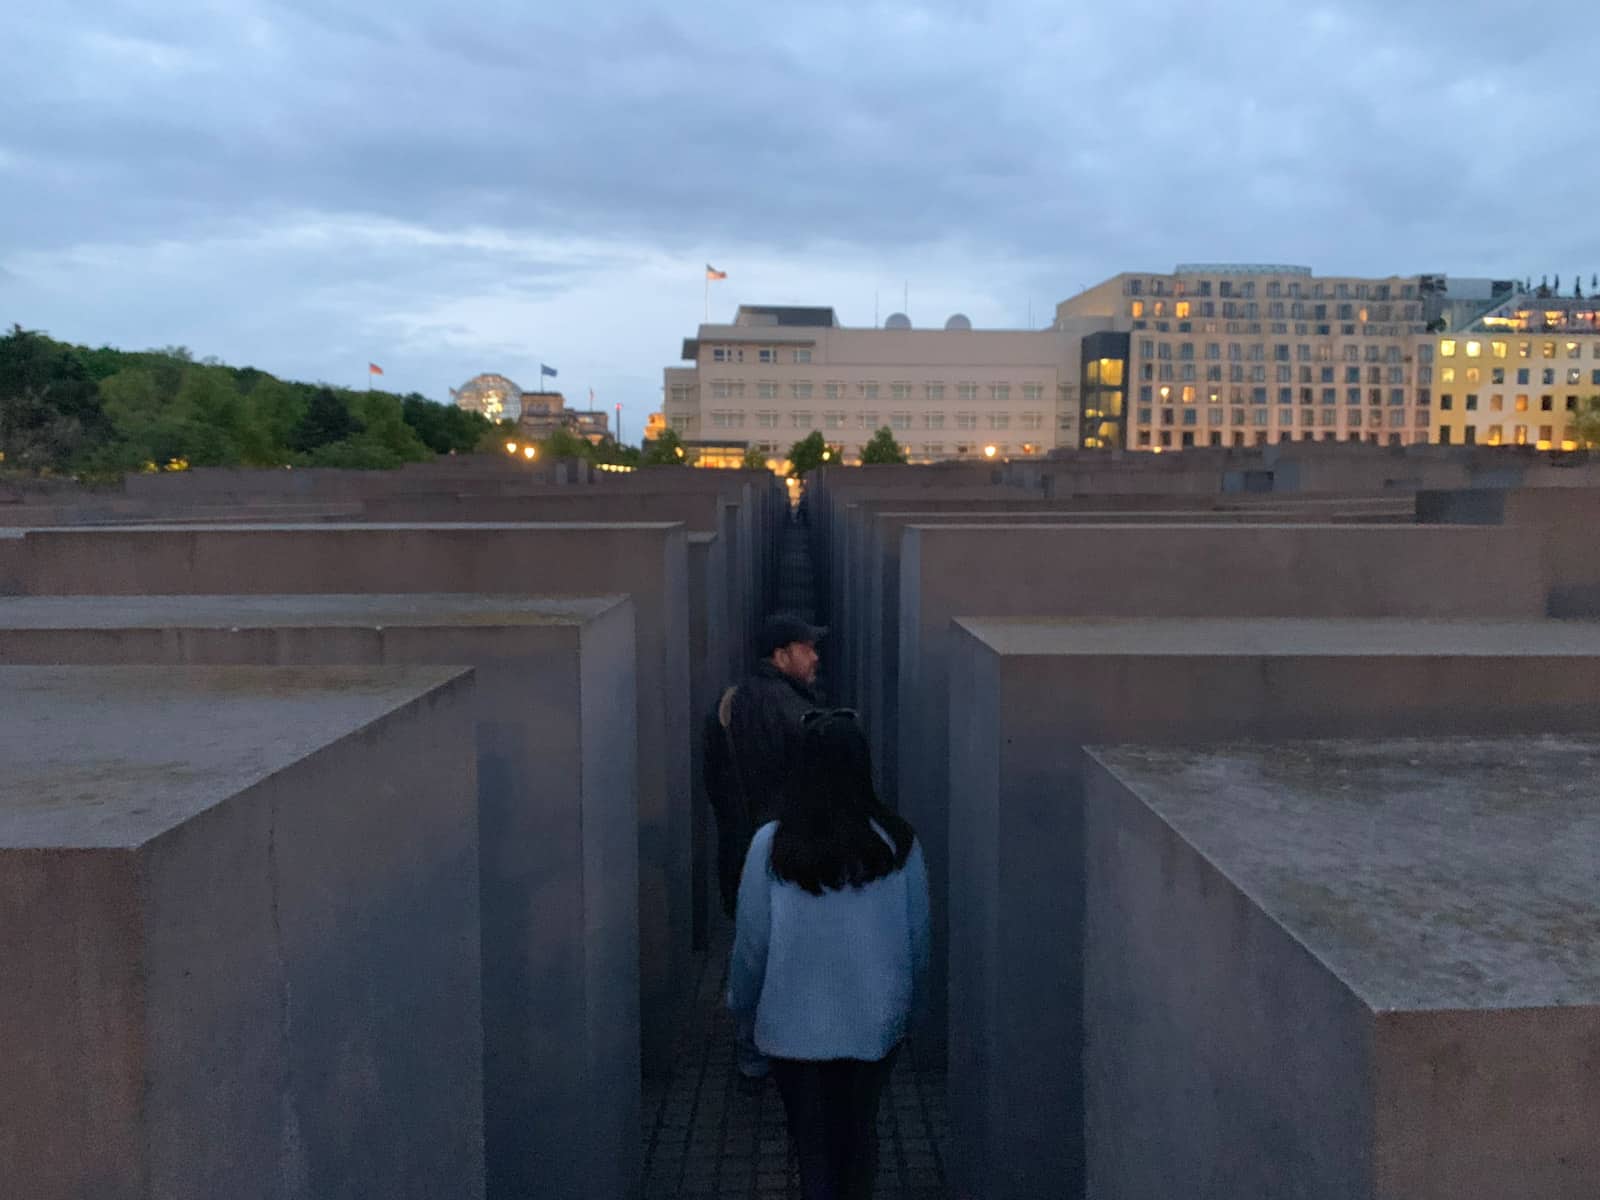 A man, and a woman walking behind him, walking through large pillars of a memorial at dusk